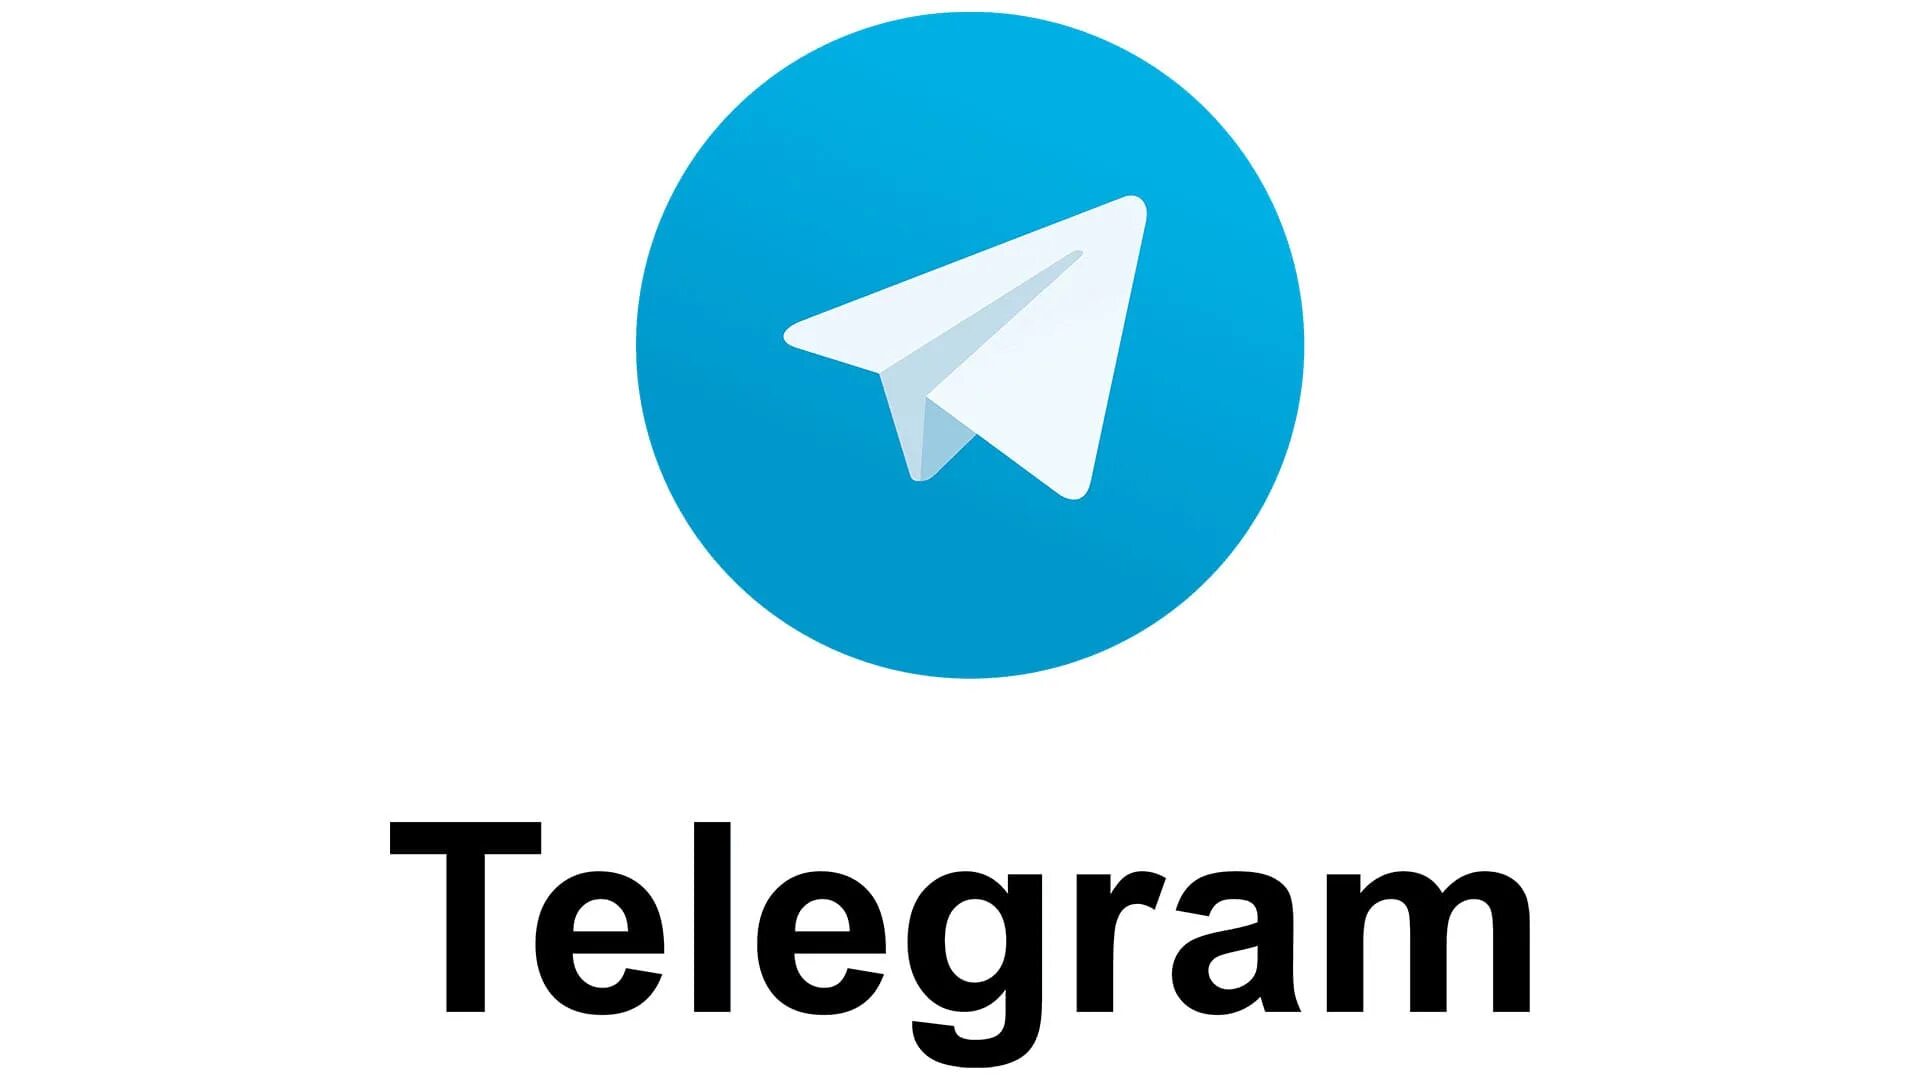 Турк телеграм. Телеграмм. Логотип телеграмм. Пиктограмма телеграмм. Прозрачный значок телеграмм.